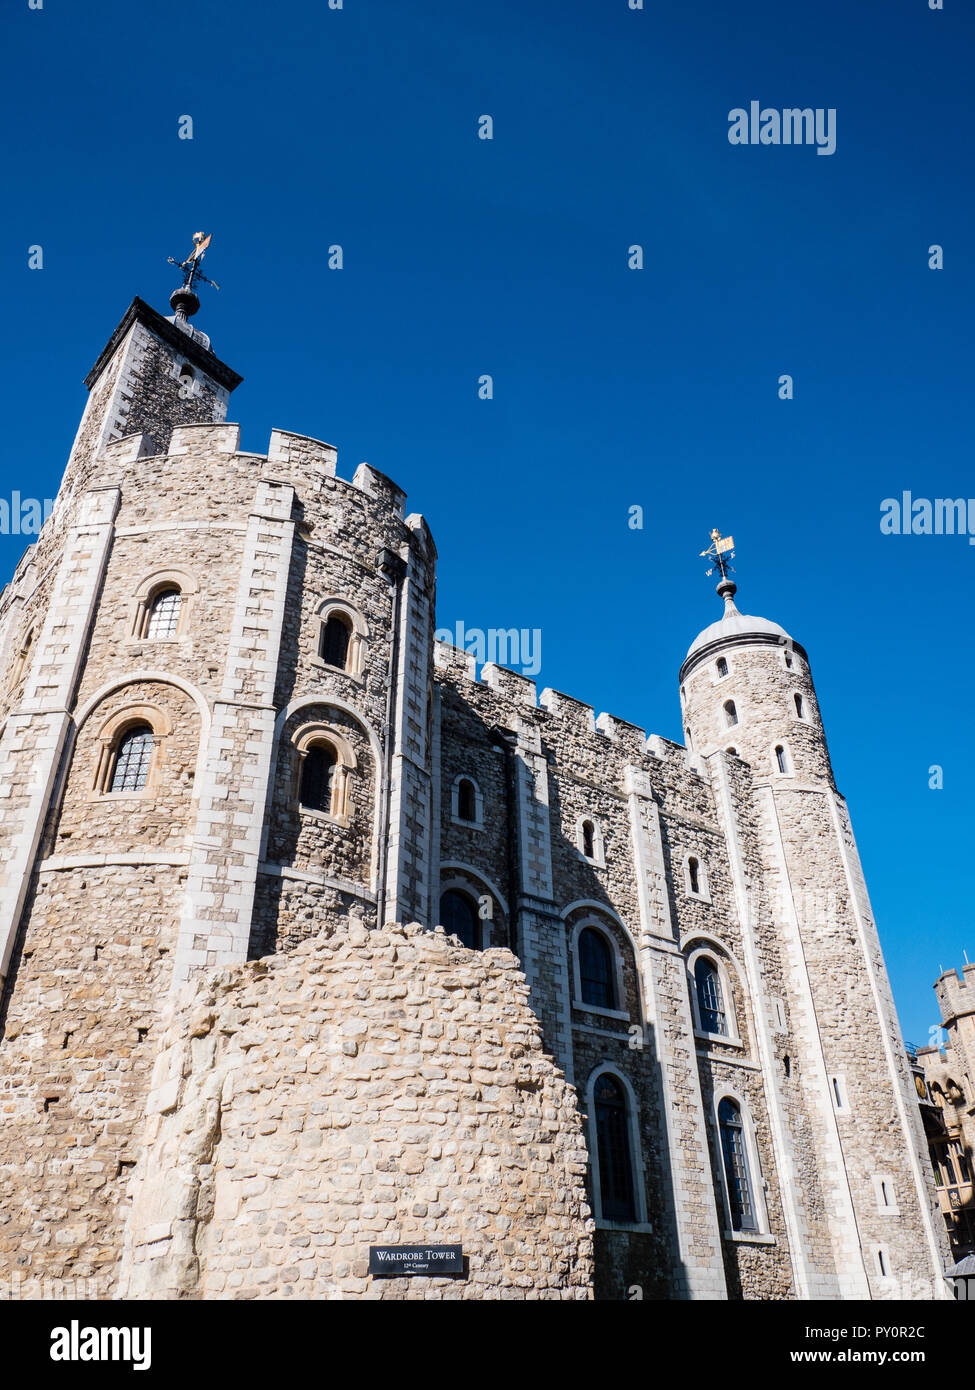 Schrank Tower Ruinen, den Weißen Turm, Turm von London, England, UK, GB. Stockfoto